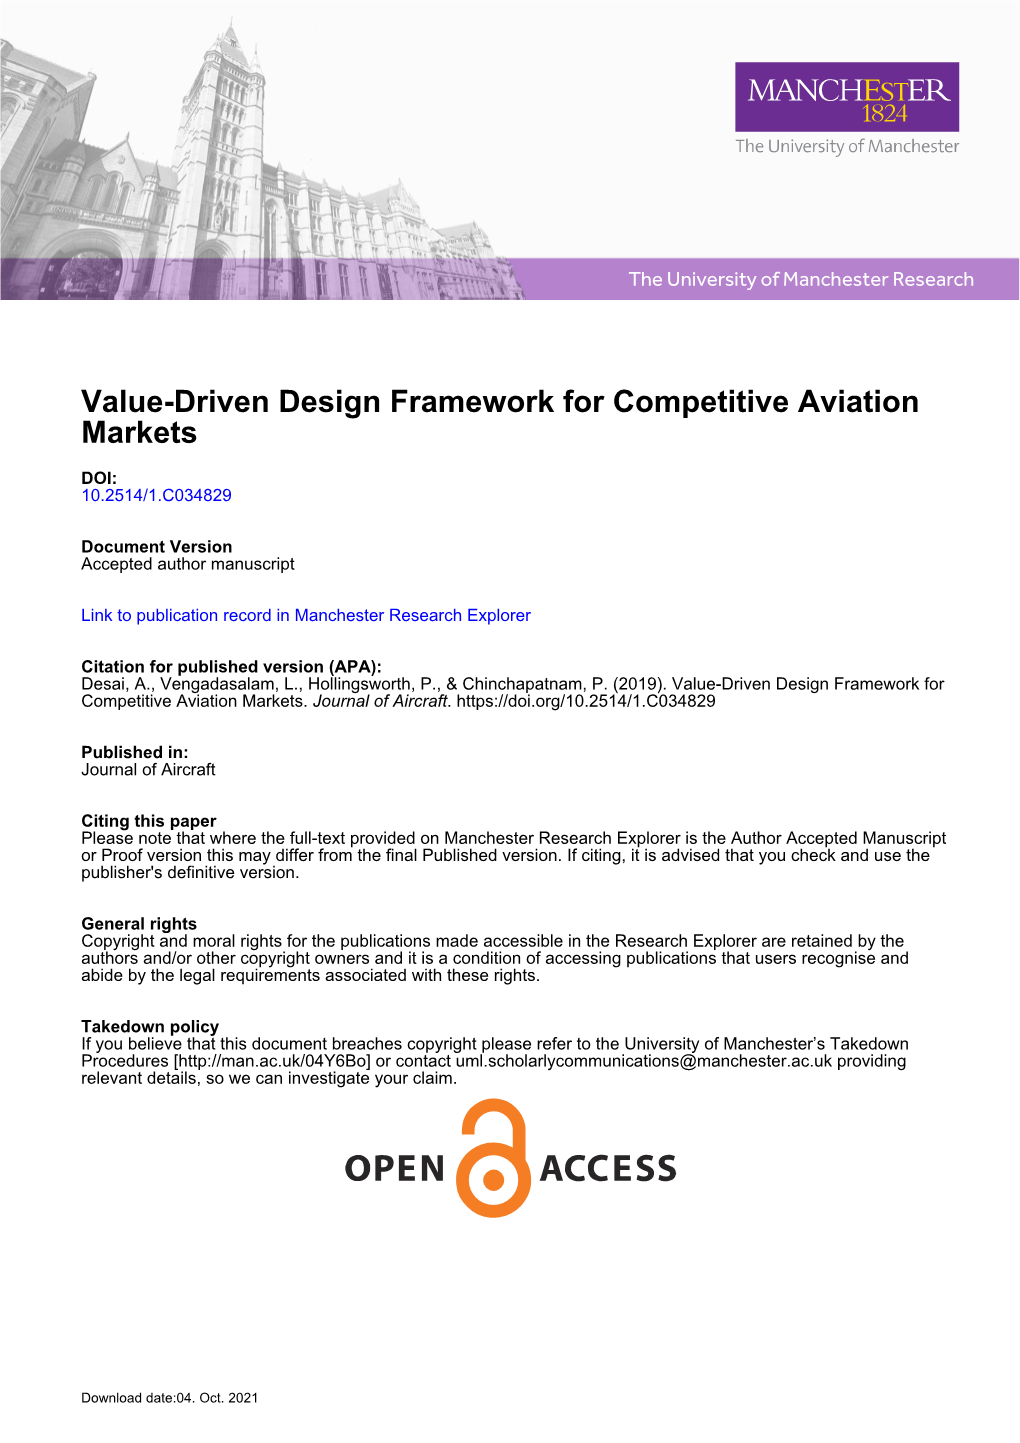 Value-Driven Design Framework for Competitive Aviation Markets